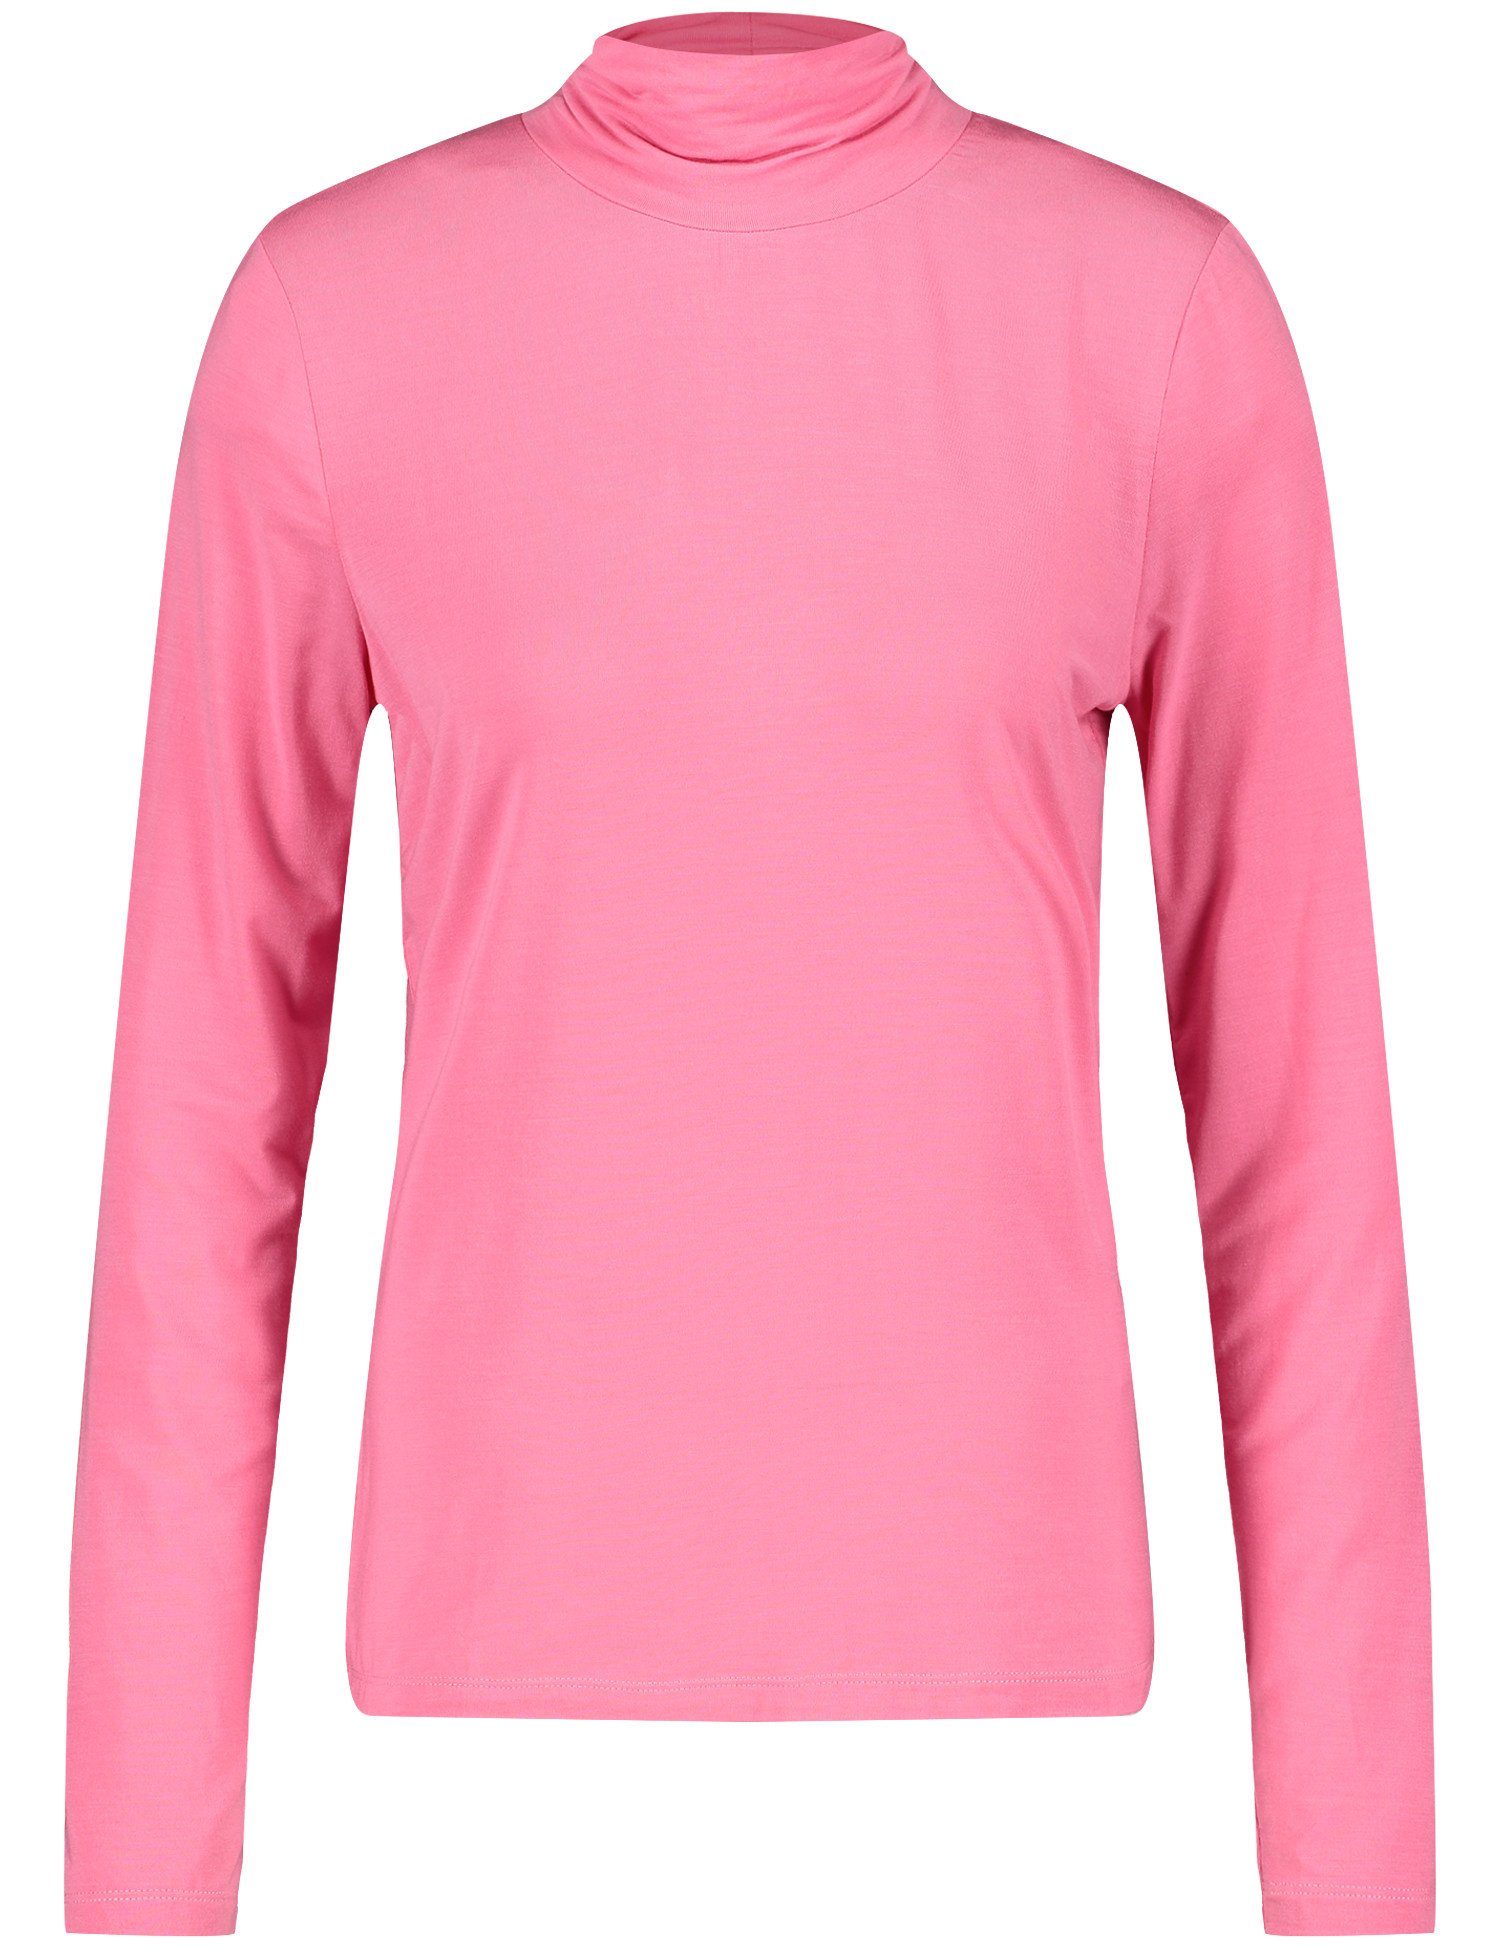 GERRY WEBER Longsleeve Langarmshirt Mit Faltenturtle rose pink